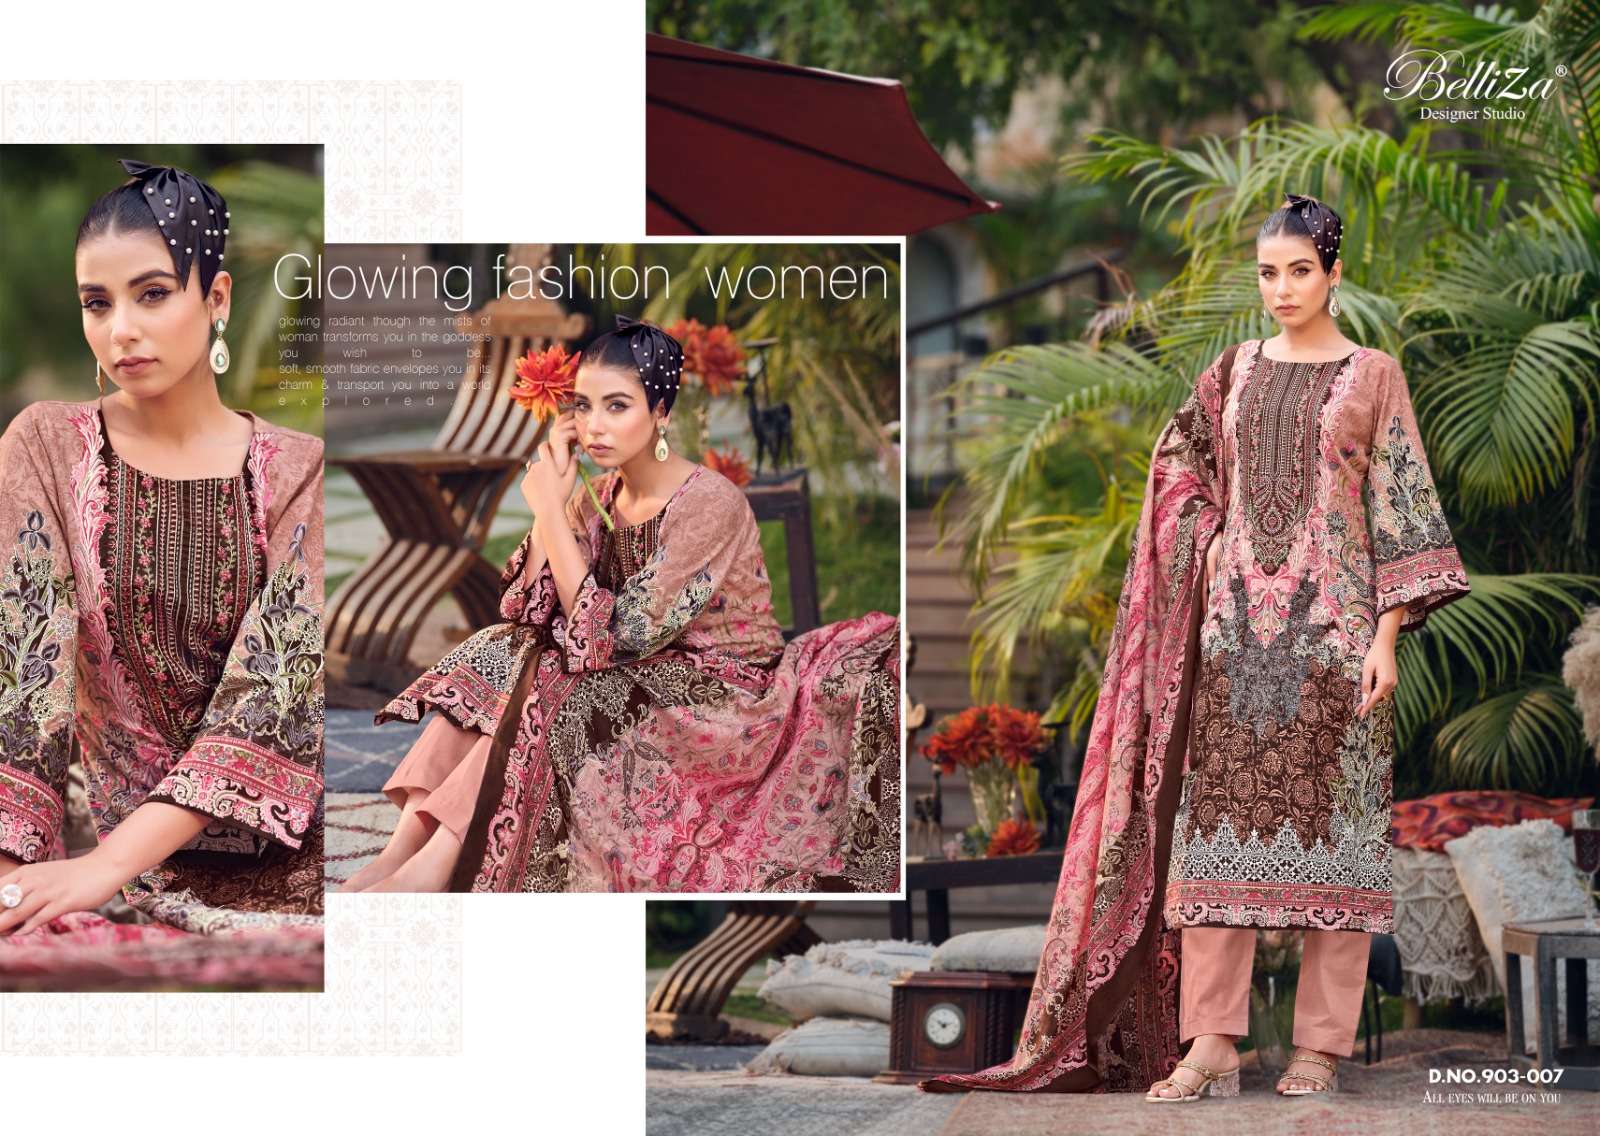 belliza designer studio naira vol 45 cotton catchy look salwar suit catalog